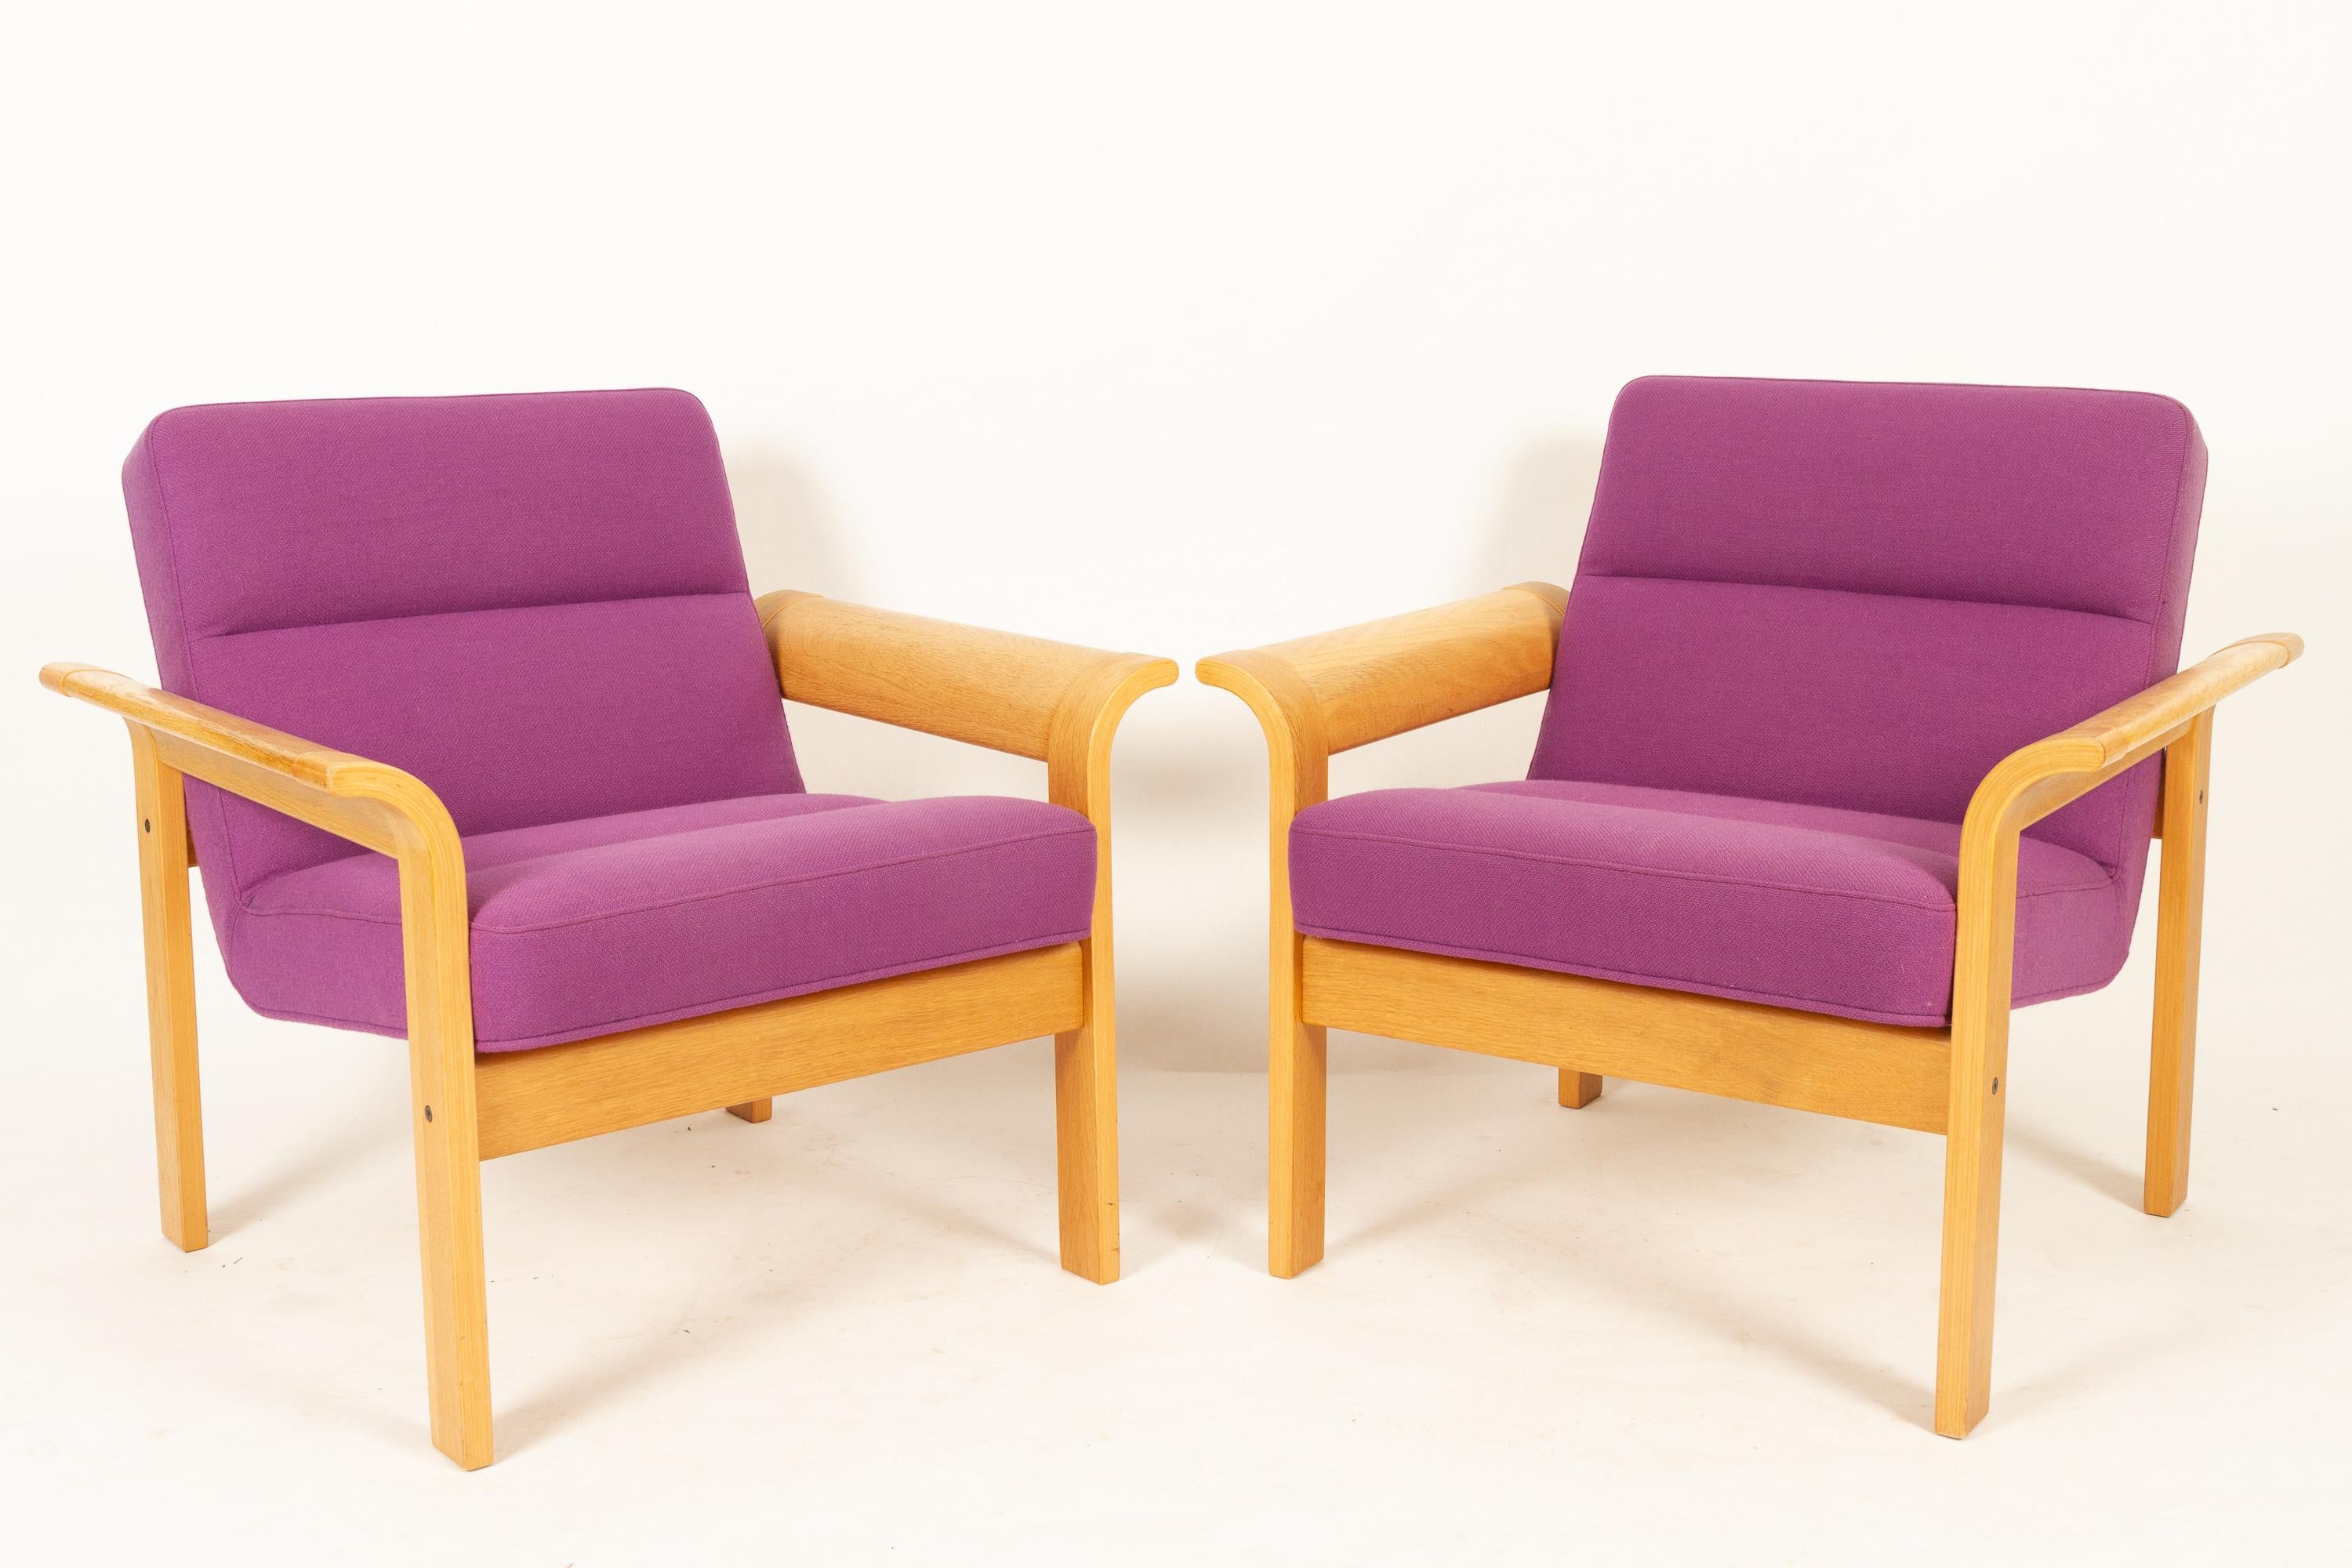 Late 20th Century Danish Oak Lounge Chairs and Ottoman by Thygesen & Sørensen for Magnus Olesen